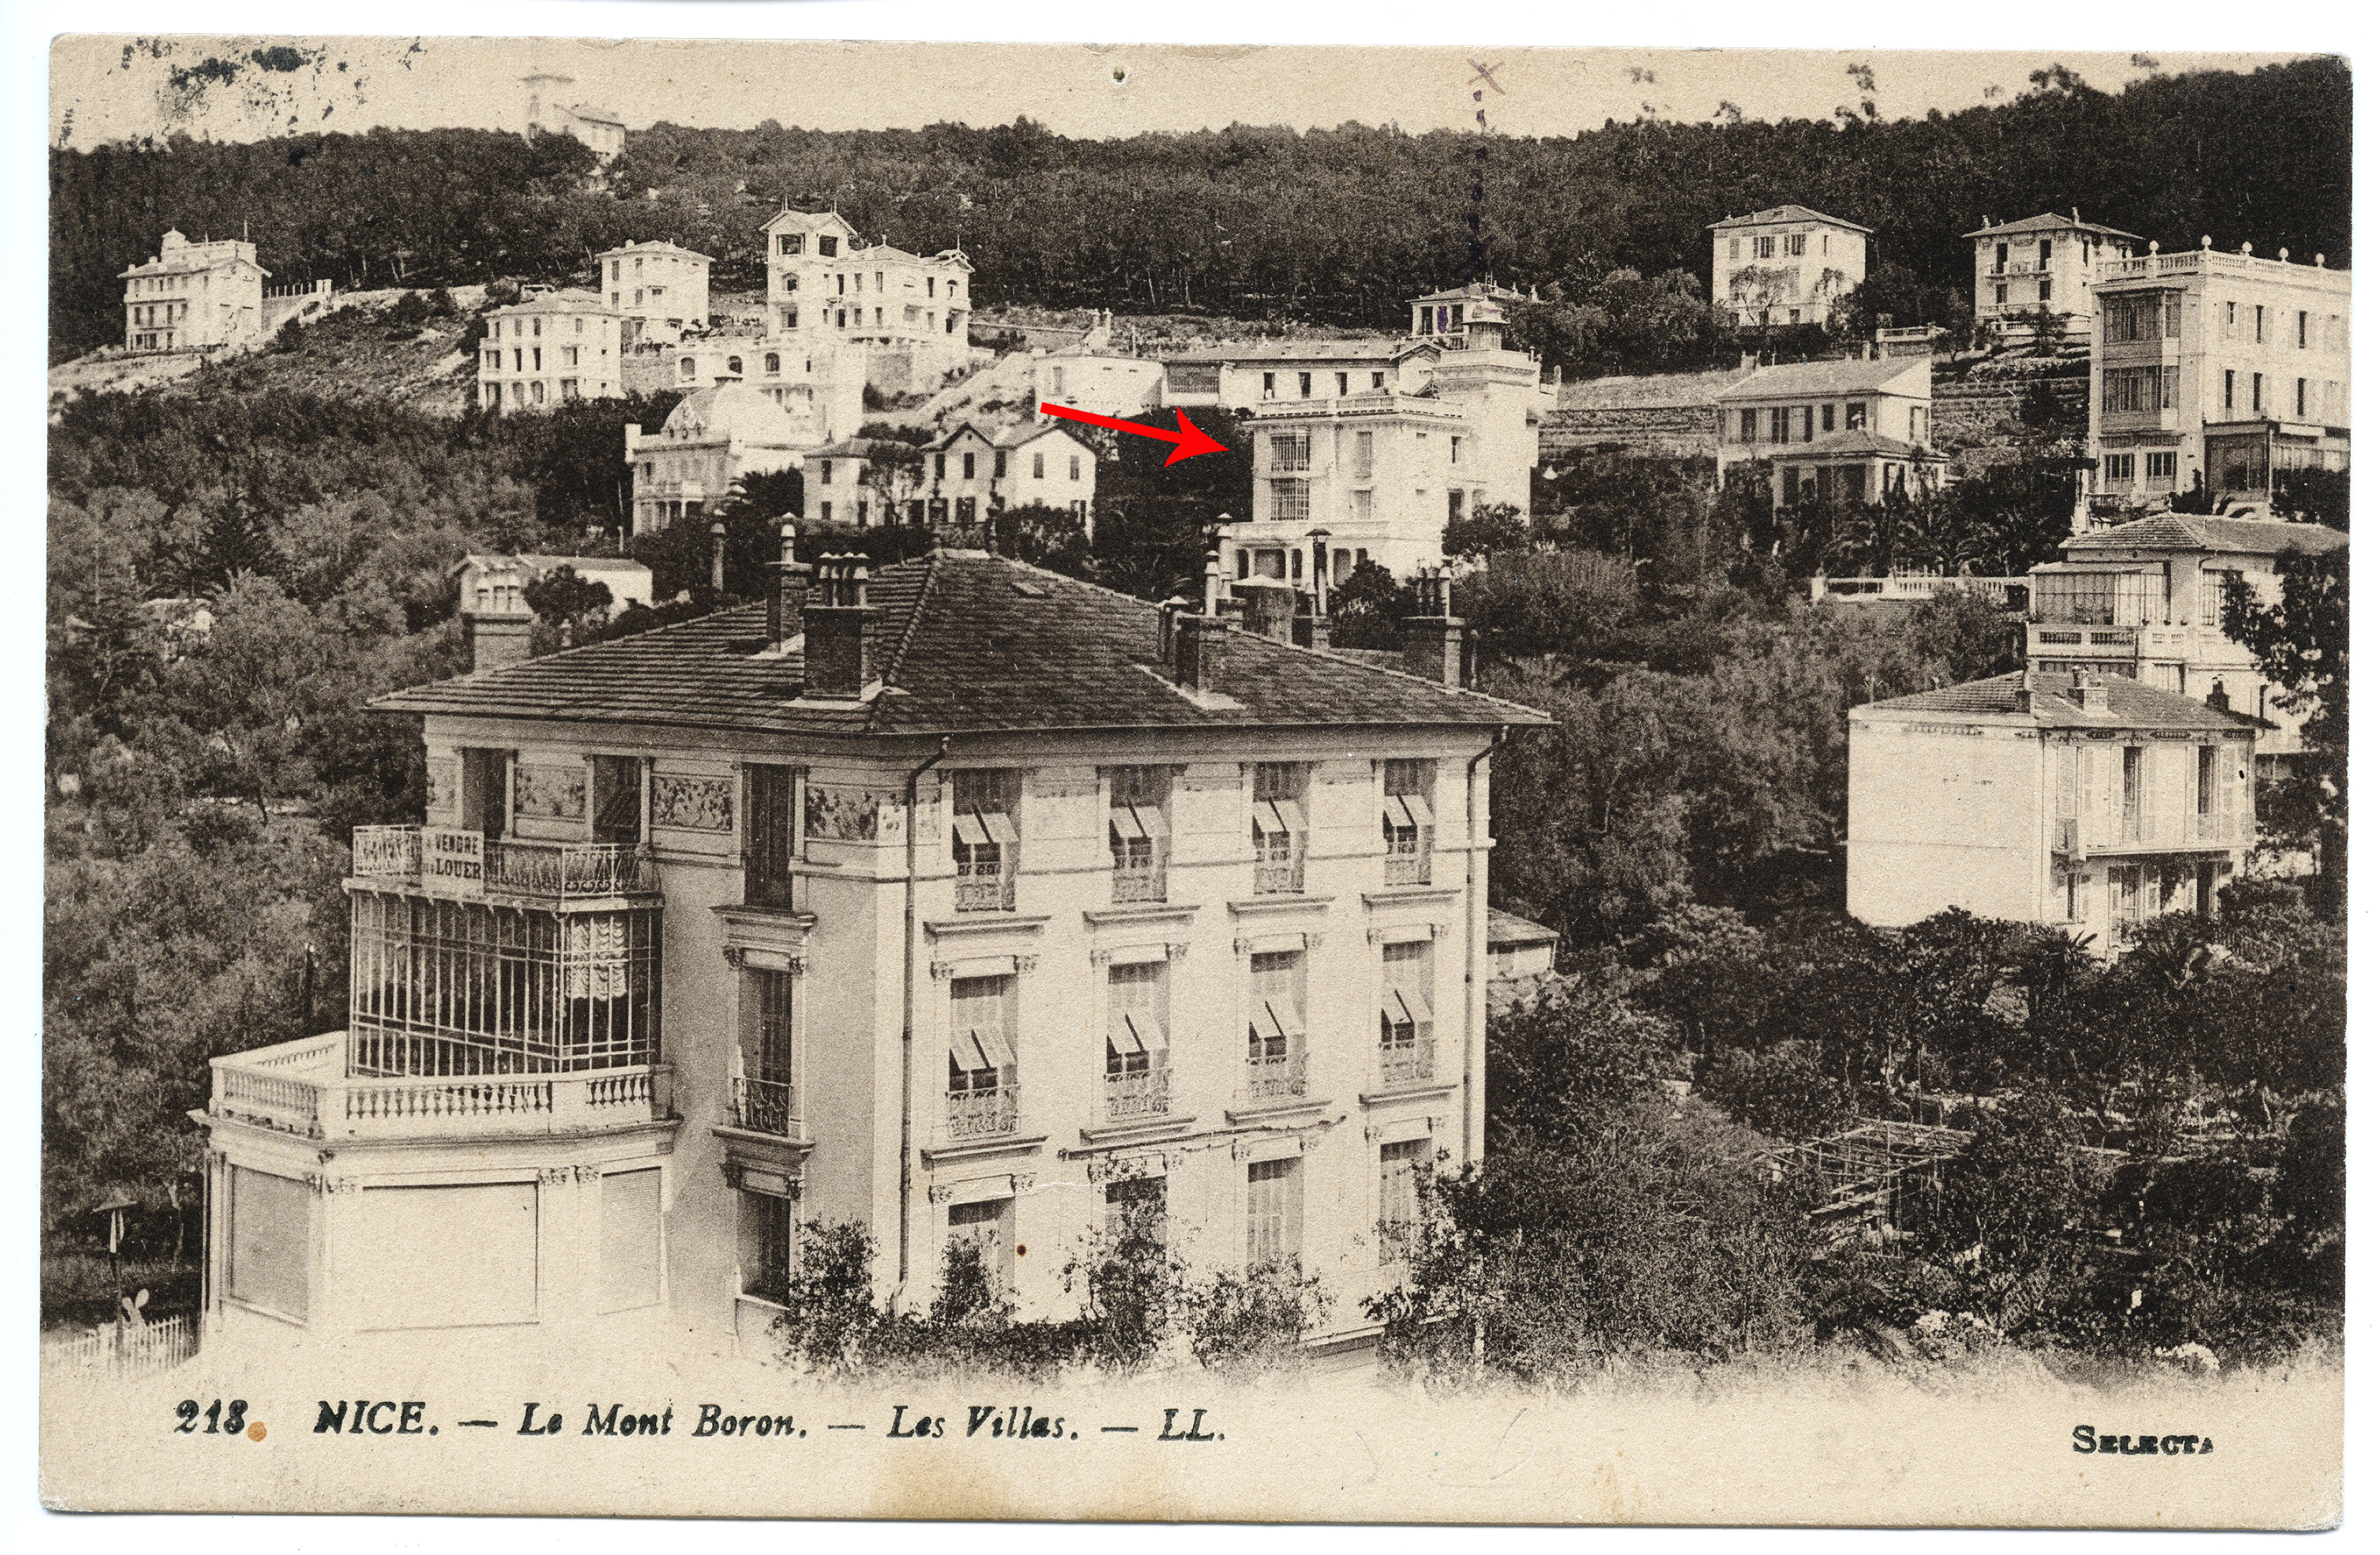 Carte postale des Villas du Mont-Boron 1917 (?) Localisation de la villa Gergovia.